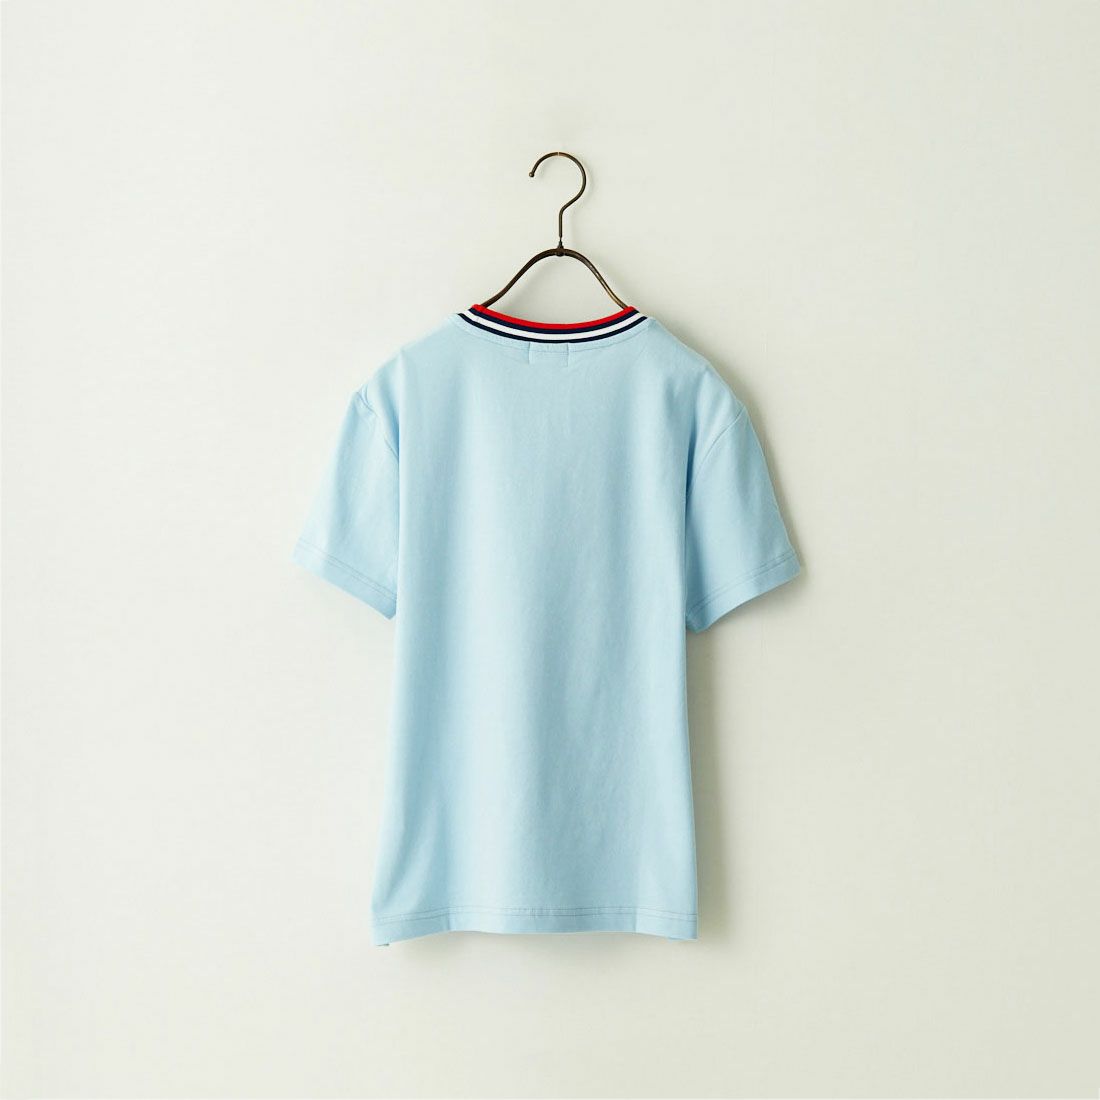 Gymphlex [ジムフレックス] クルーネック ニットラインTシャツ [GY-C0327CCB] SAX BLUE